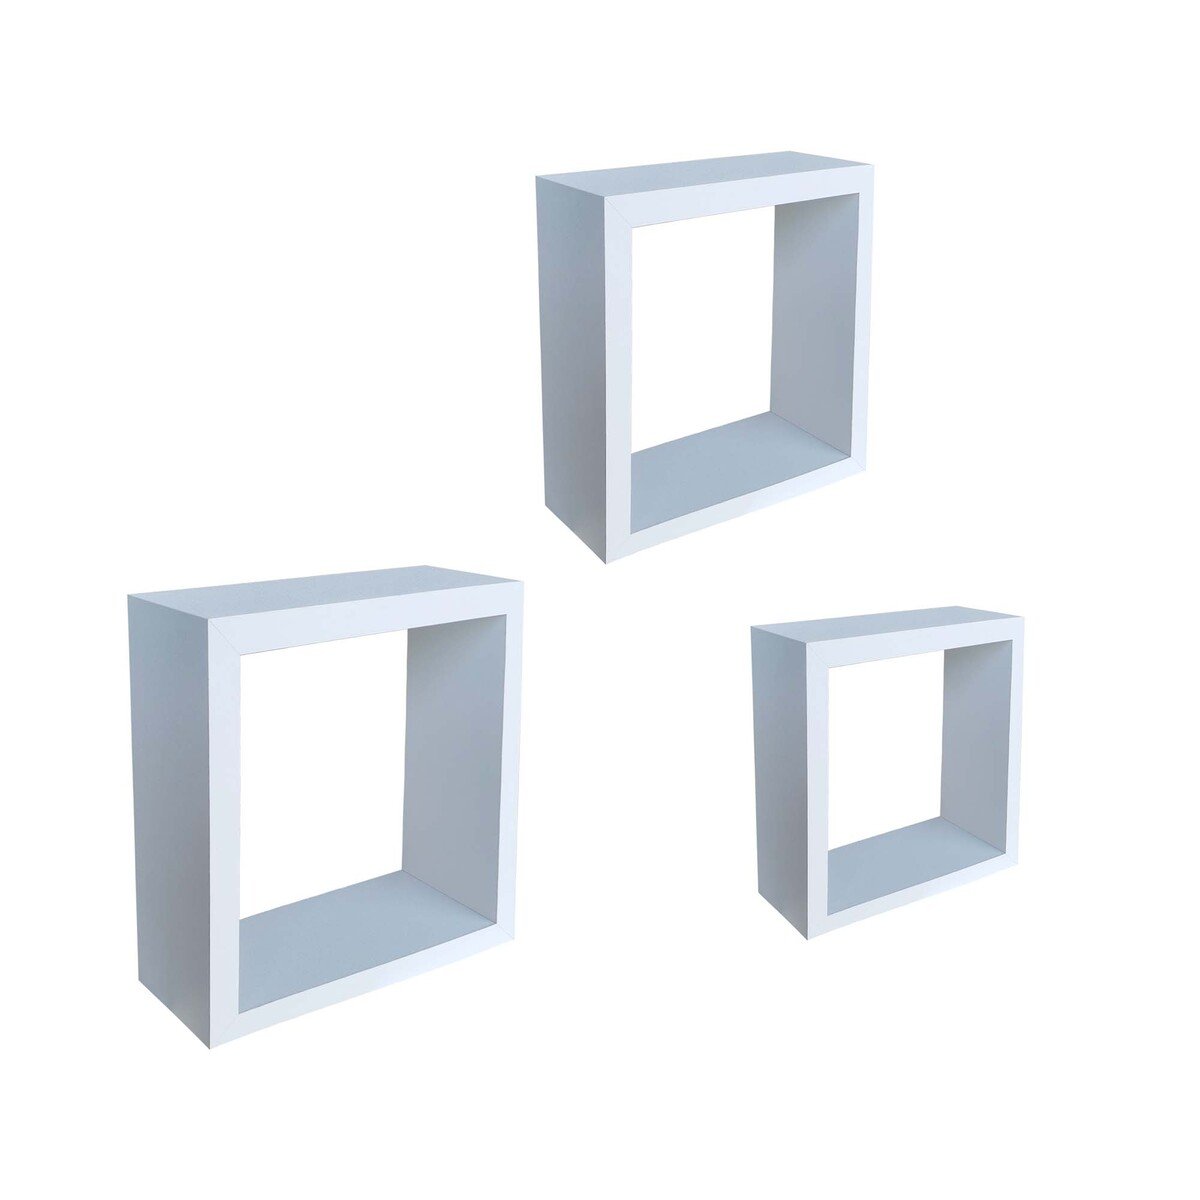 Maple Leaf Home Wall Shelf Cube 3pcs Set White A905A Size: W25xD9xH25cm / Size: W20xD9xH20cm / Size: W15xD9xH15cm